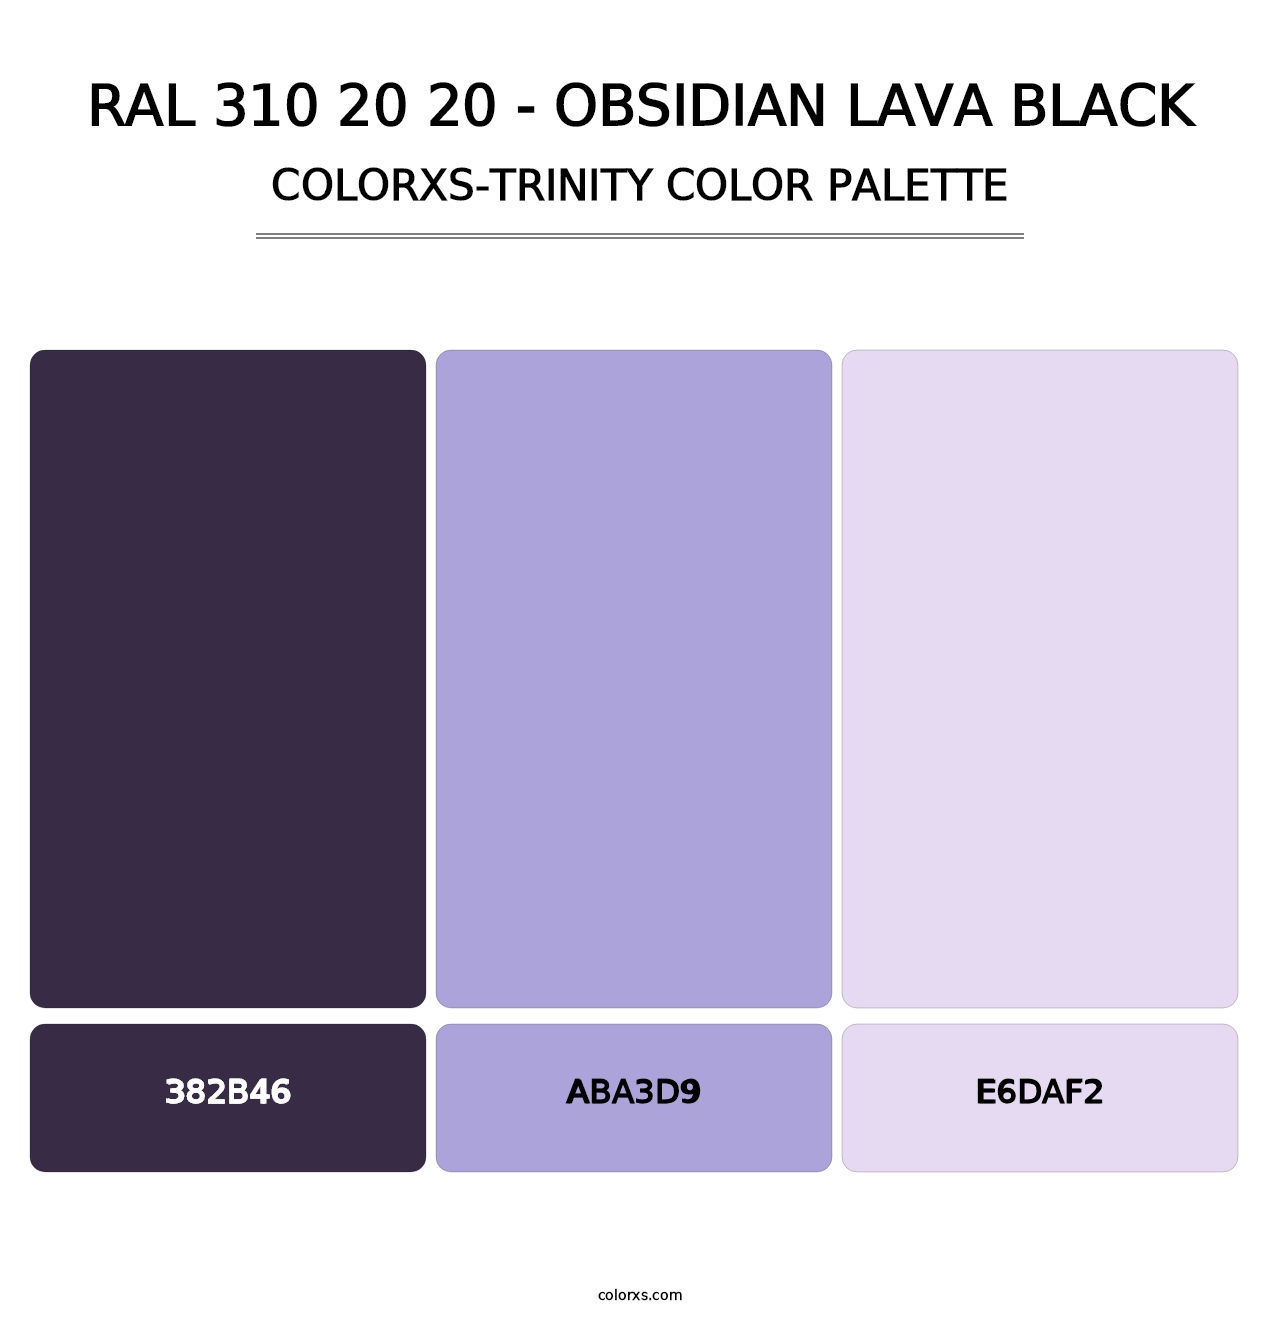 RAL 310 20 20 - Obsidian Lava Black - Colorxs Trinity Palette